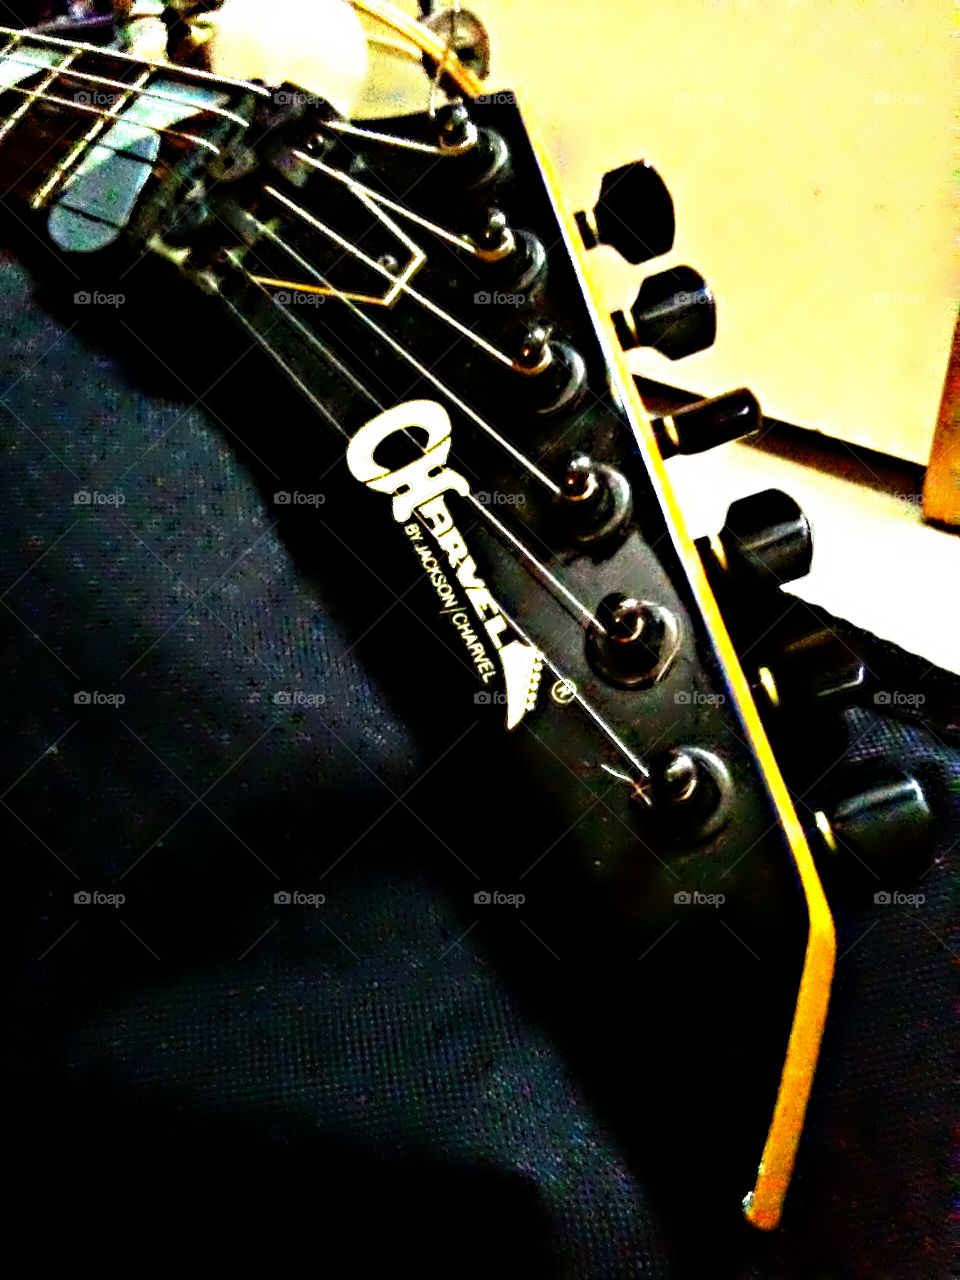 My 1987 Charvel Jackson Model 4 Black Cherry Guitar ; Japanese made .